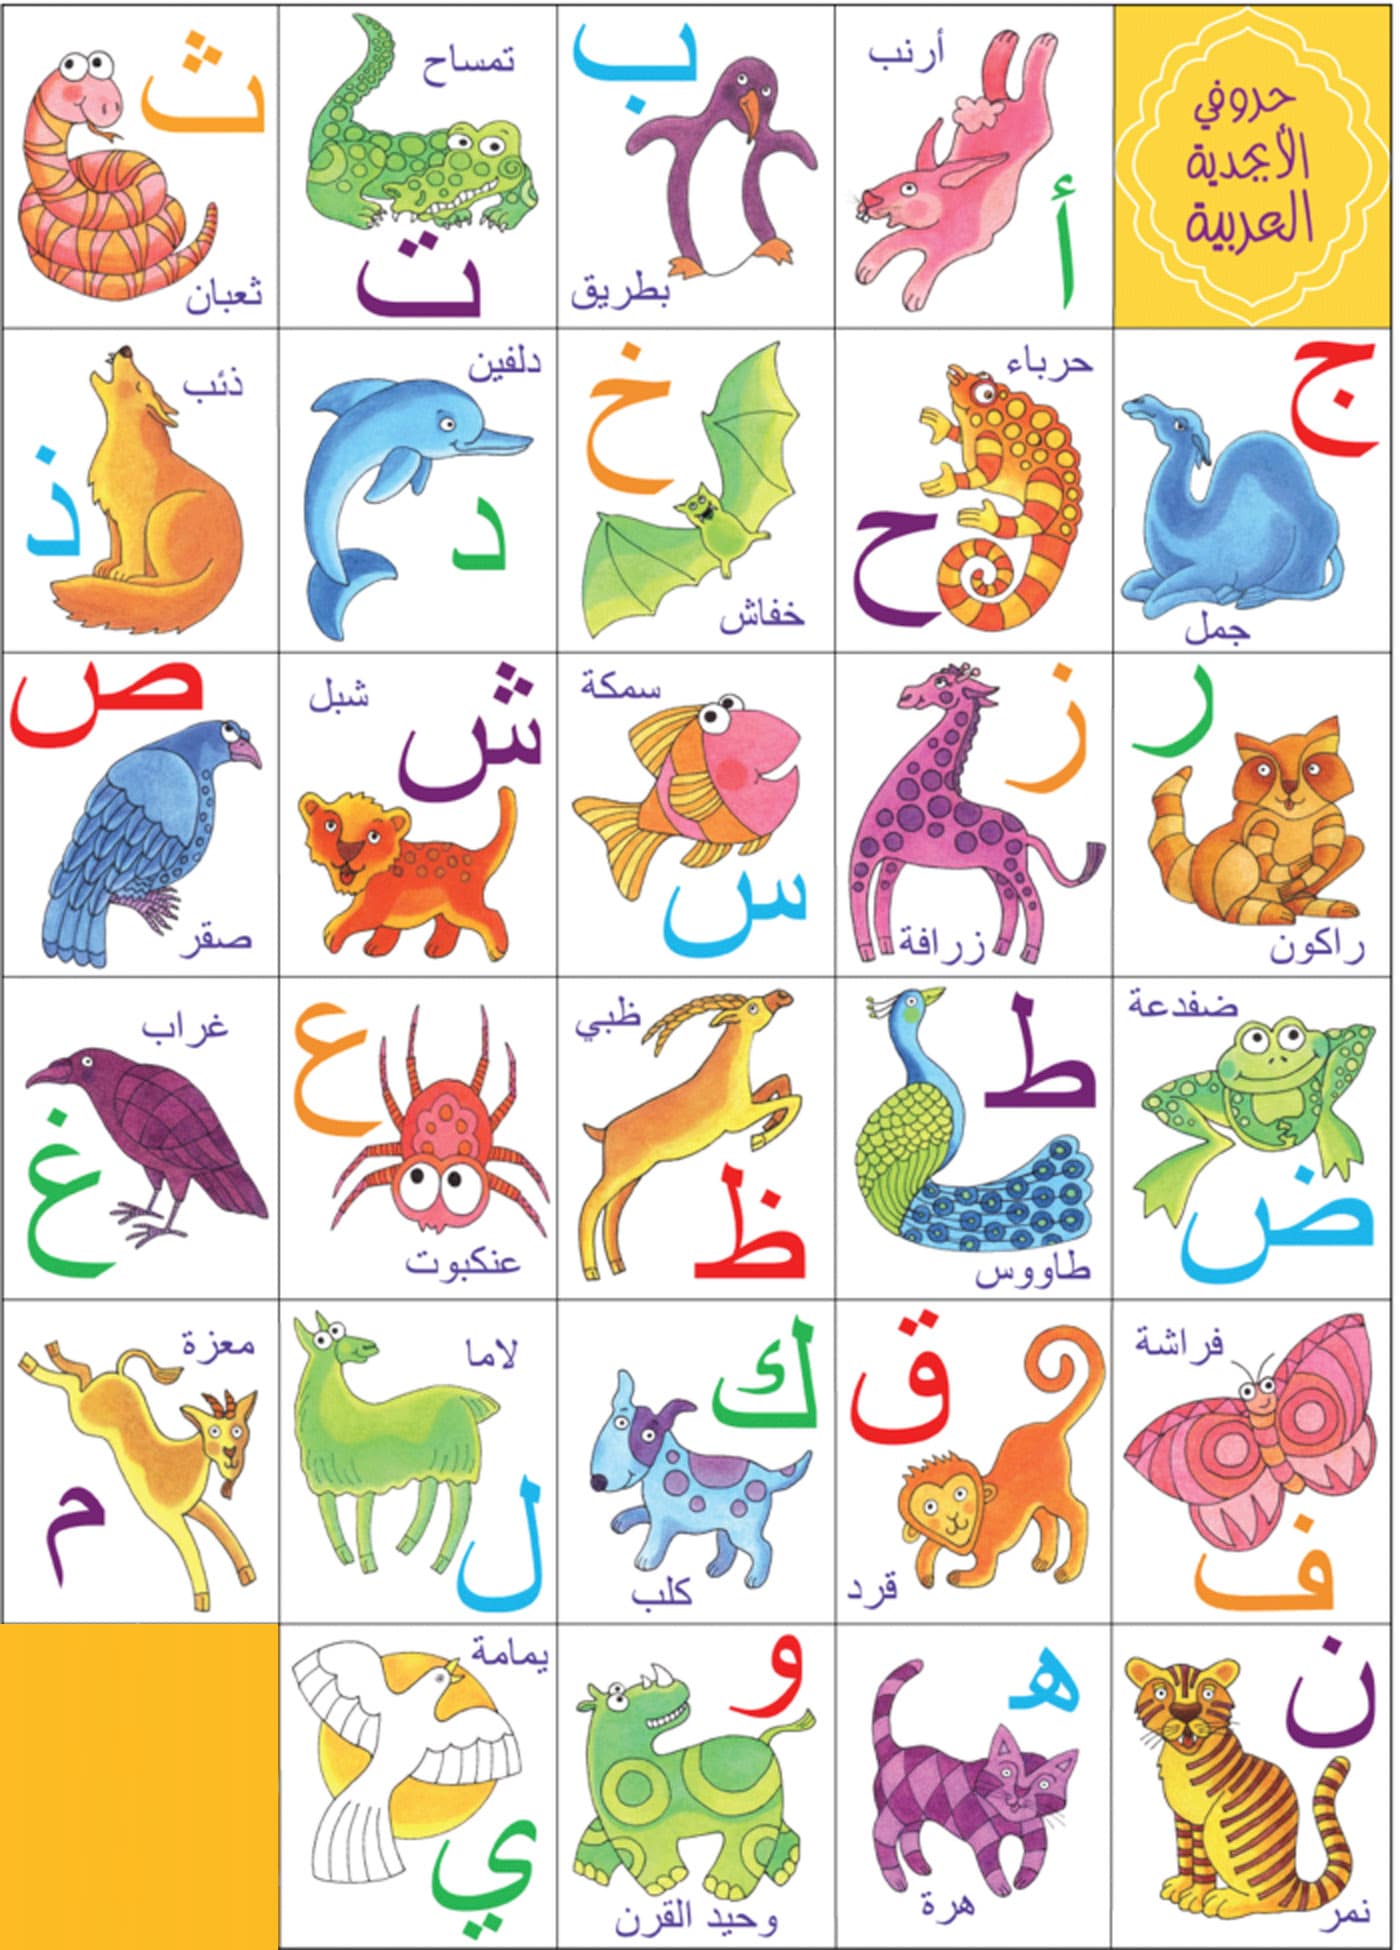 The Arabic Alphabet Chart